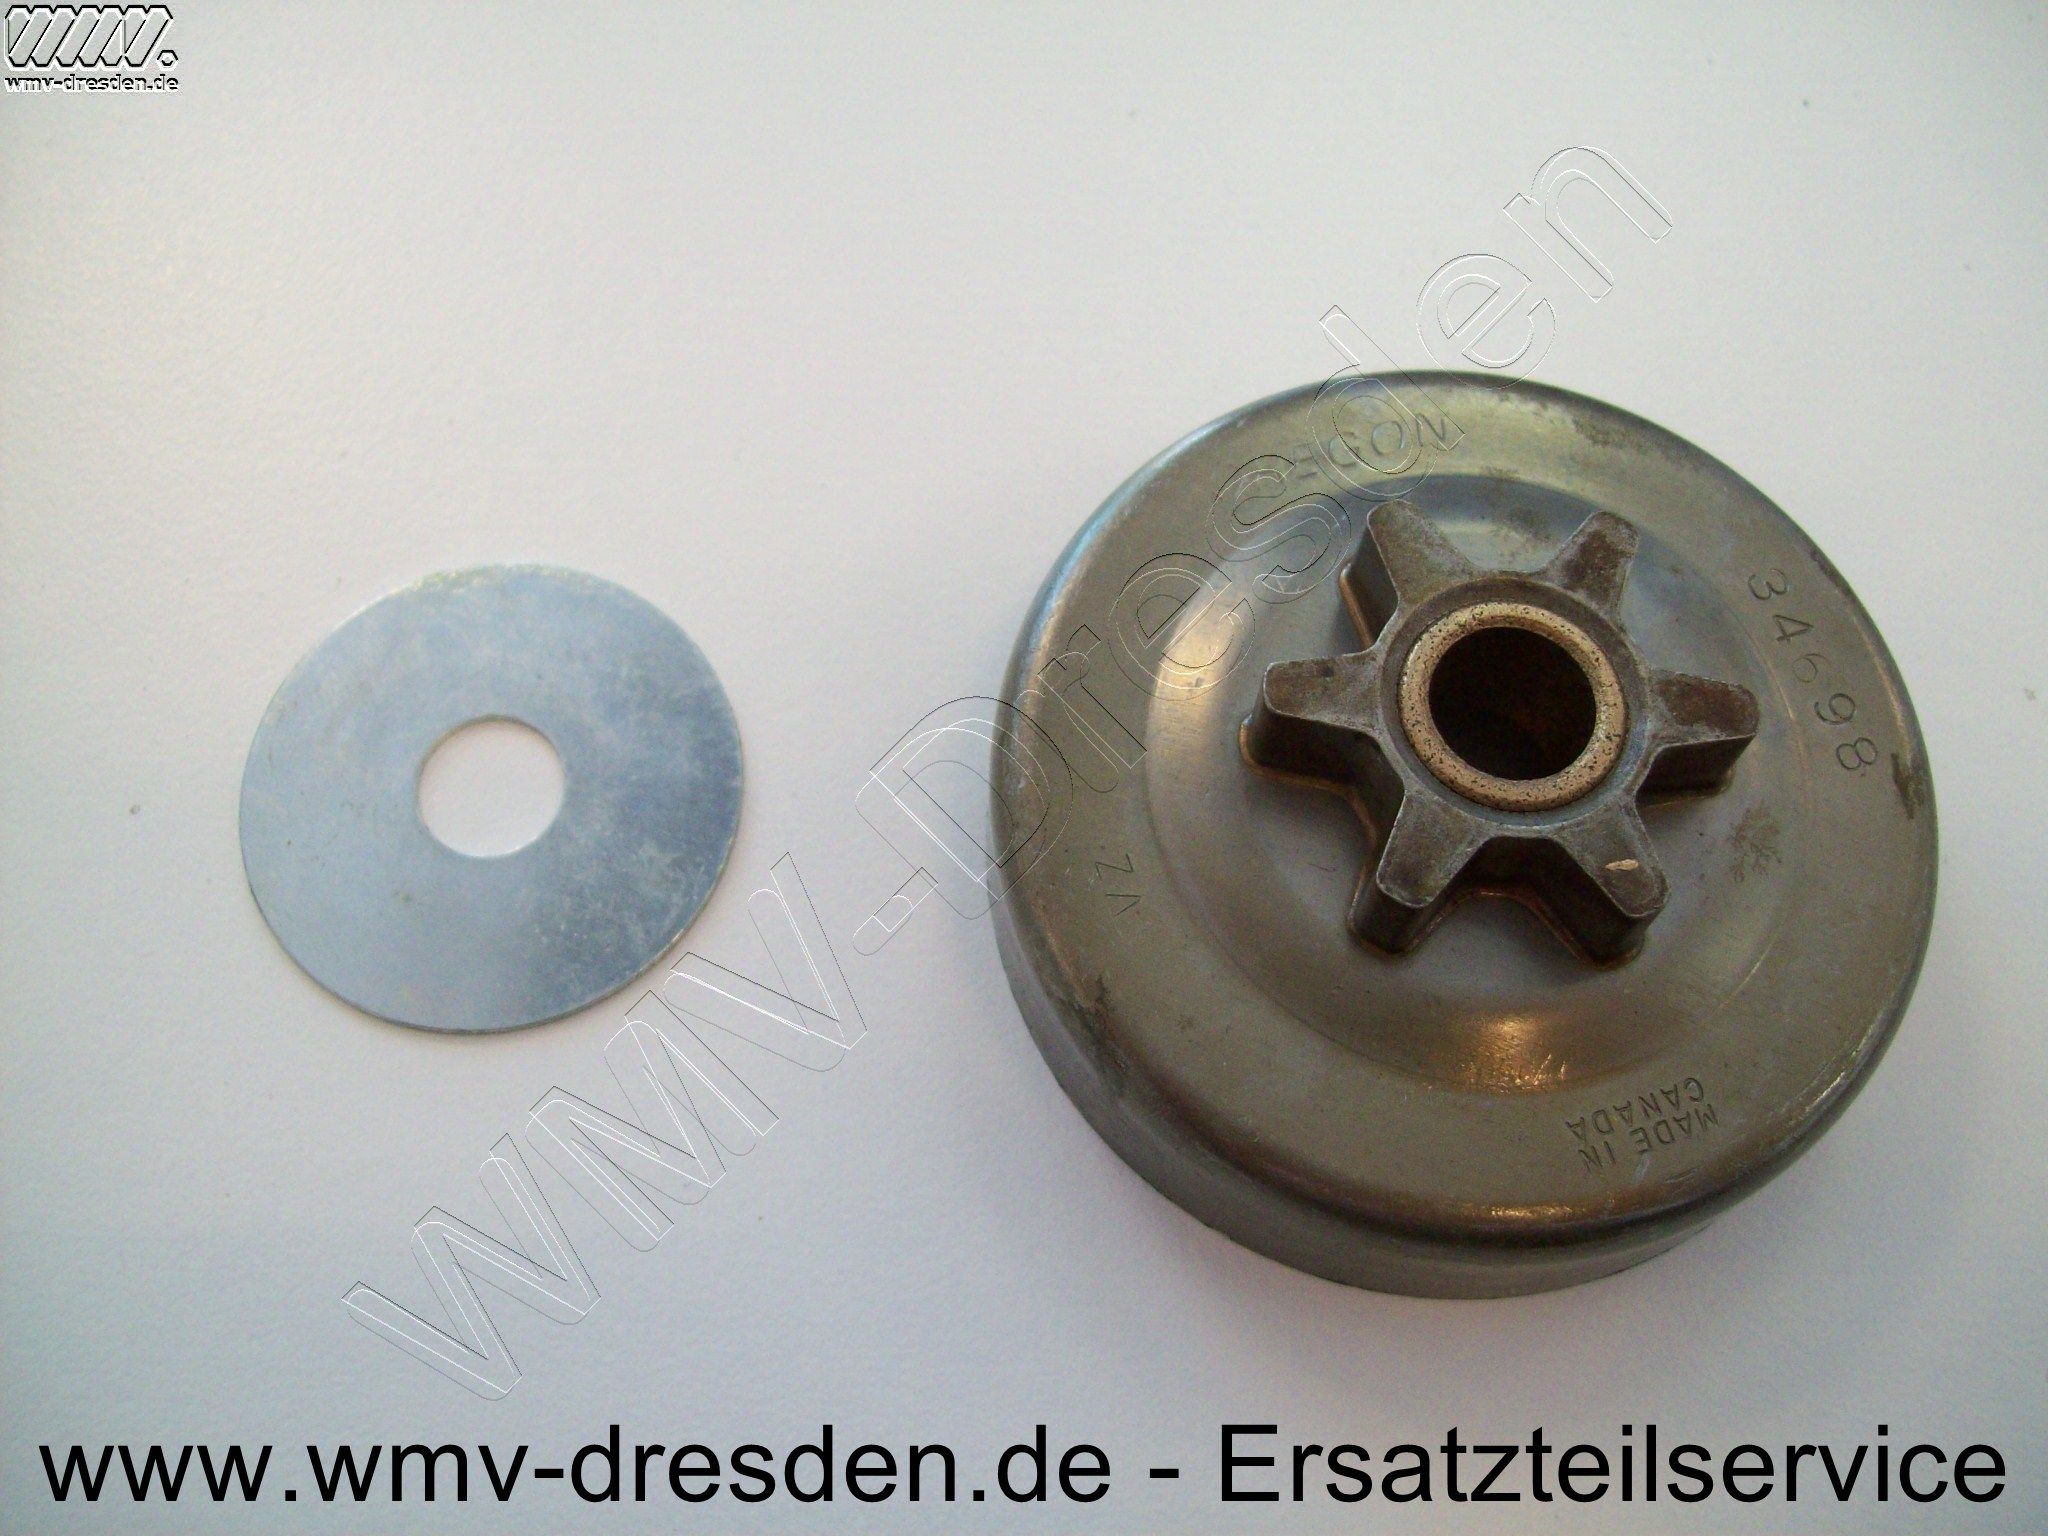 Artikel 2610071956-B17 Hersteller: Bosch-Skil-Dremel 